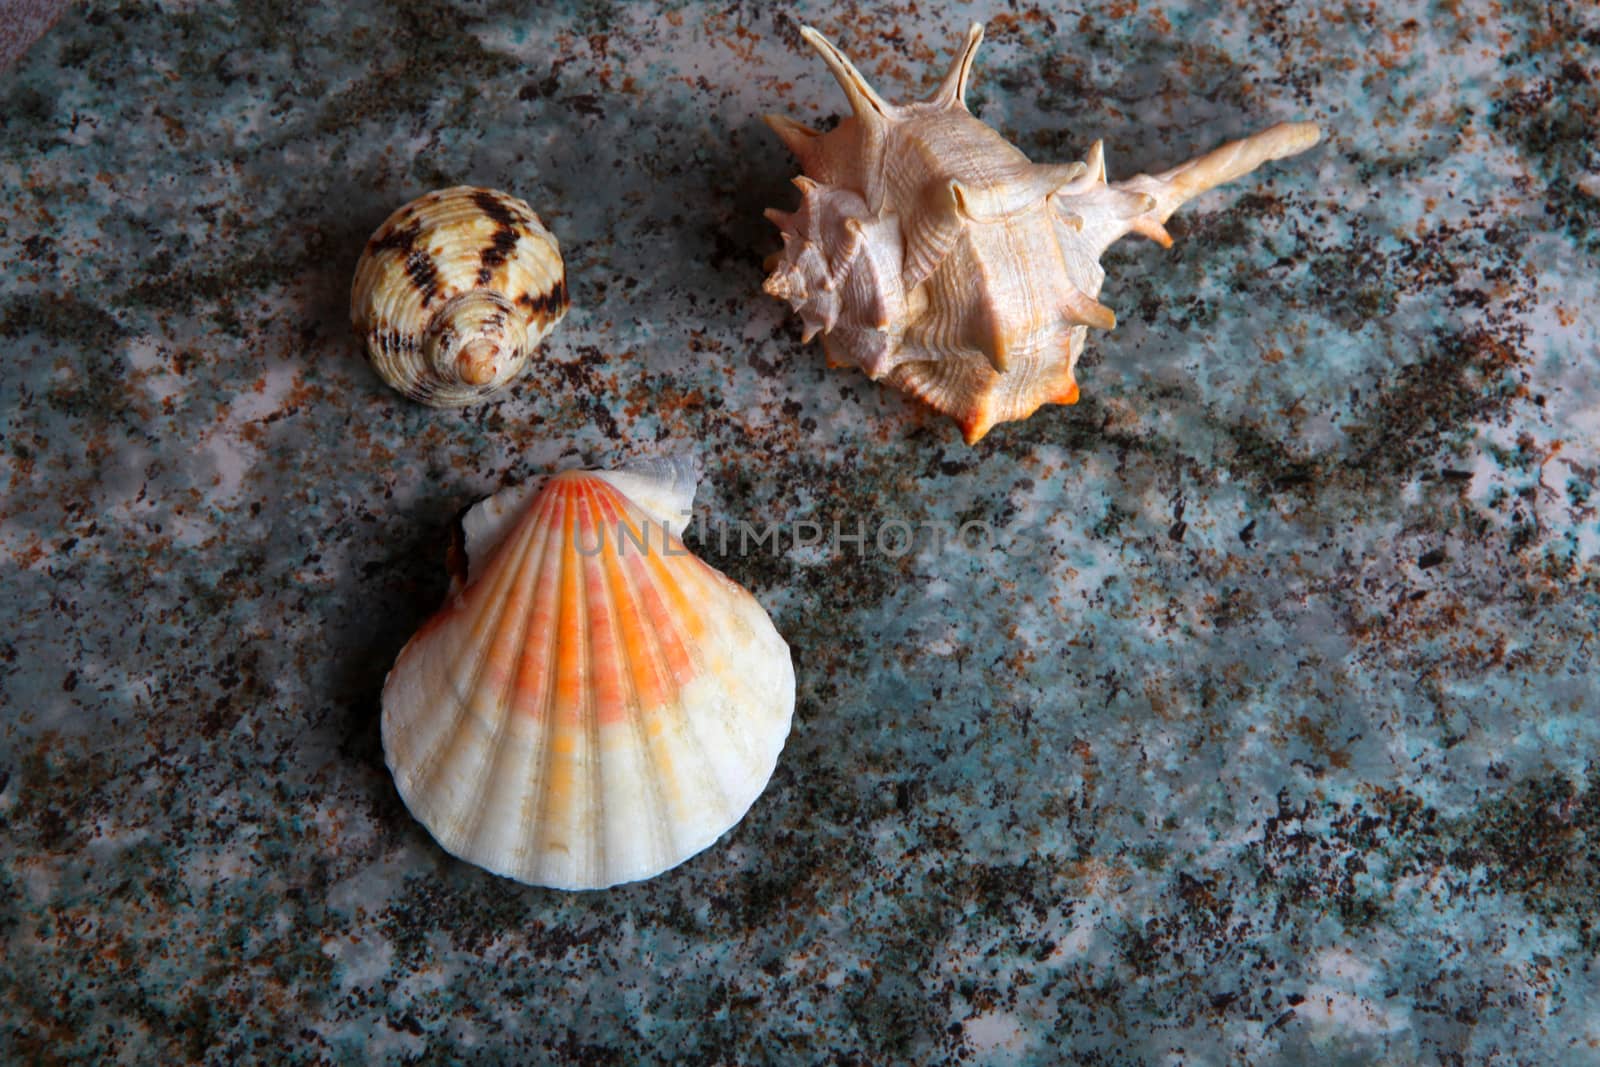 Sea shell Studio quality marble texture